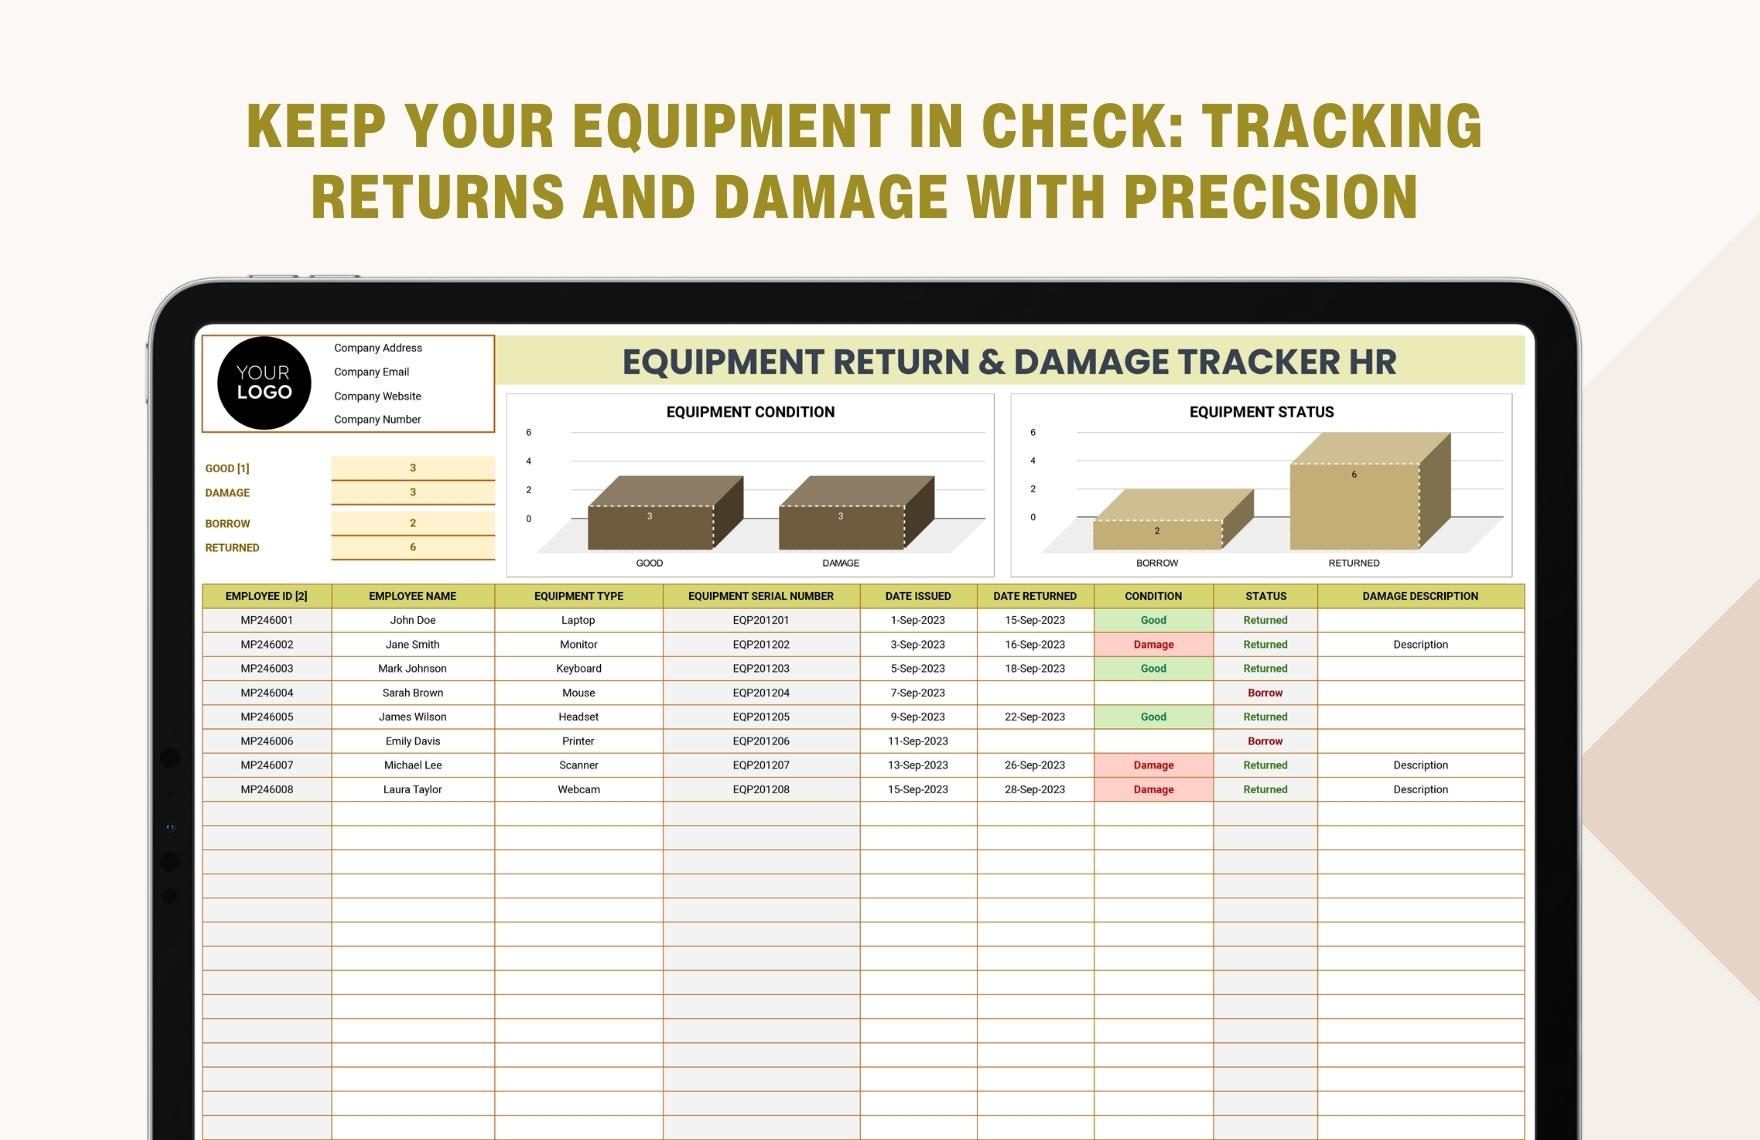 Equipment Return & Damage Tracker HR Template